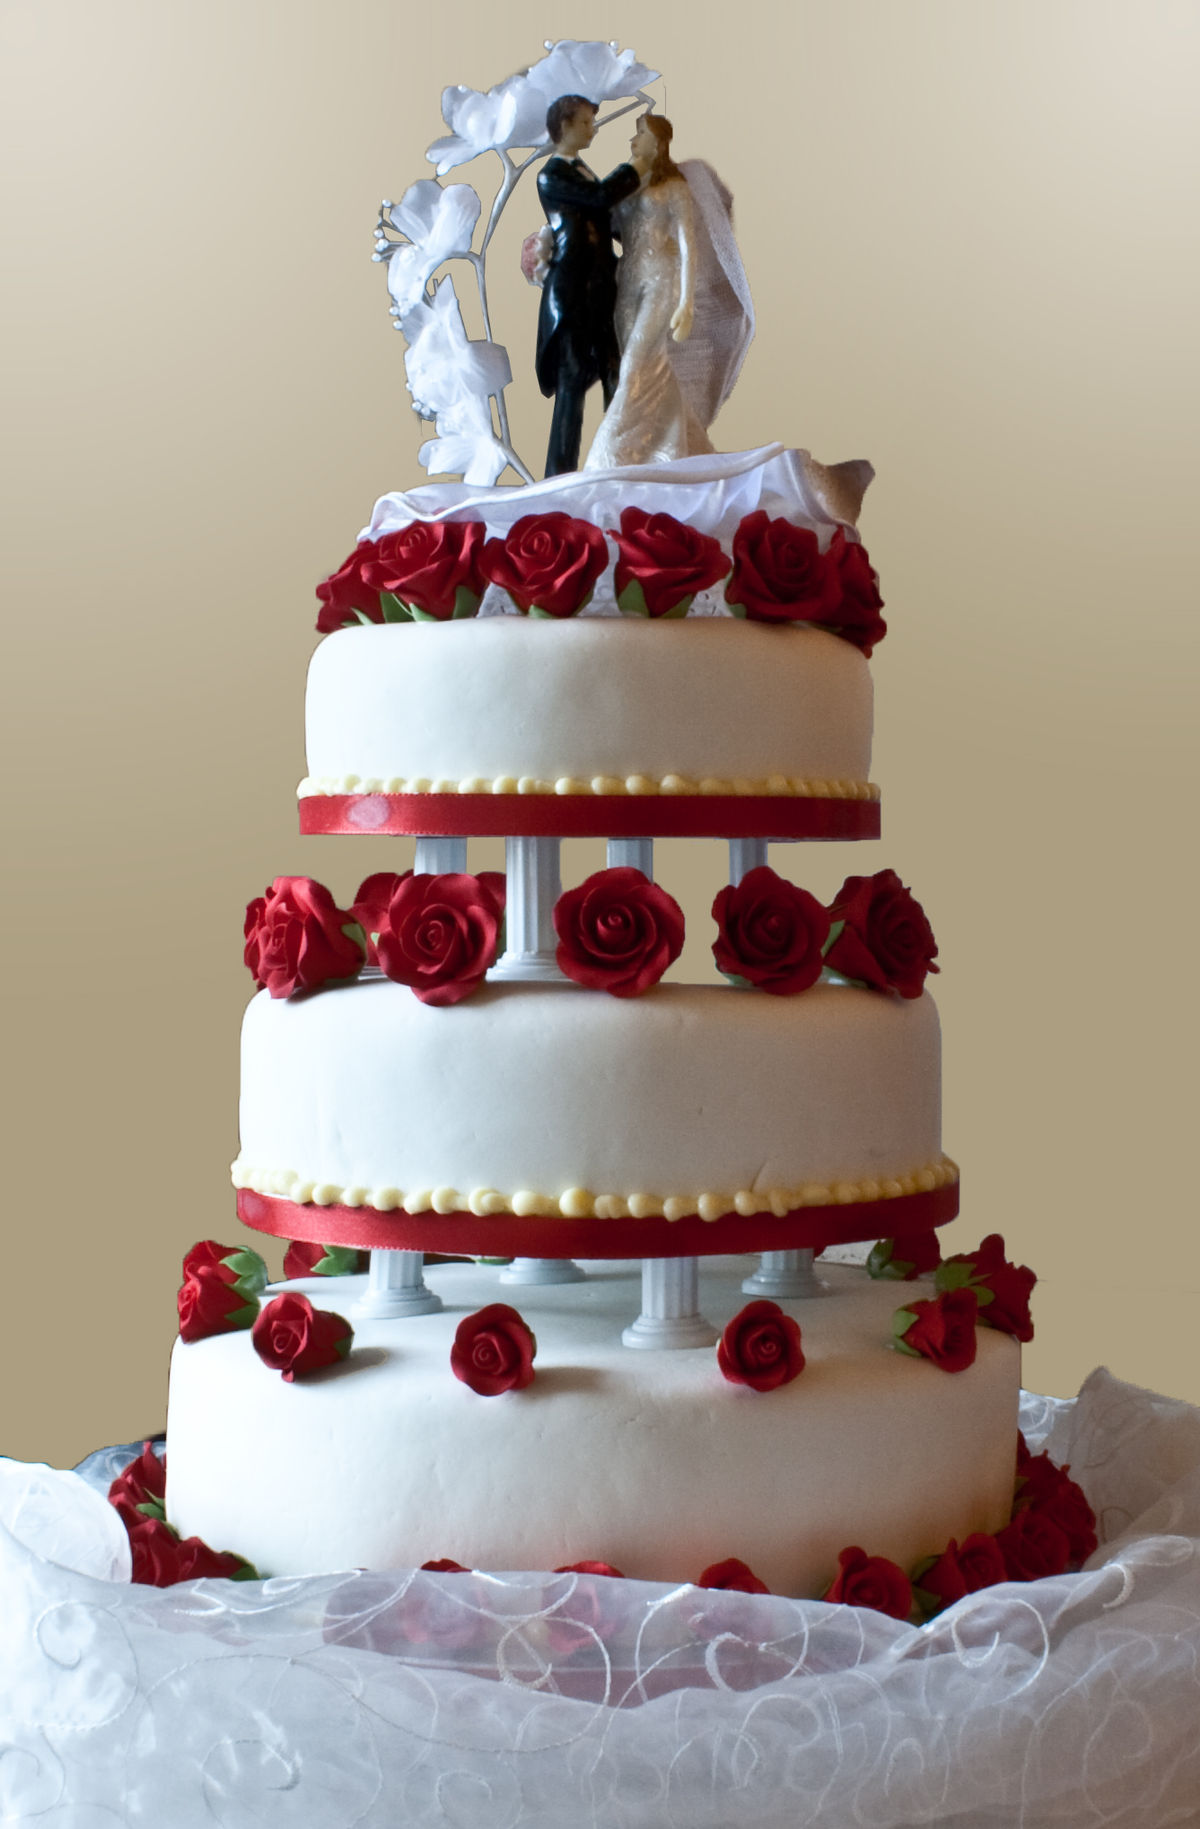 Wedding cake - Wikipedia